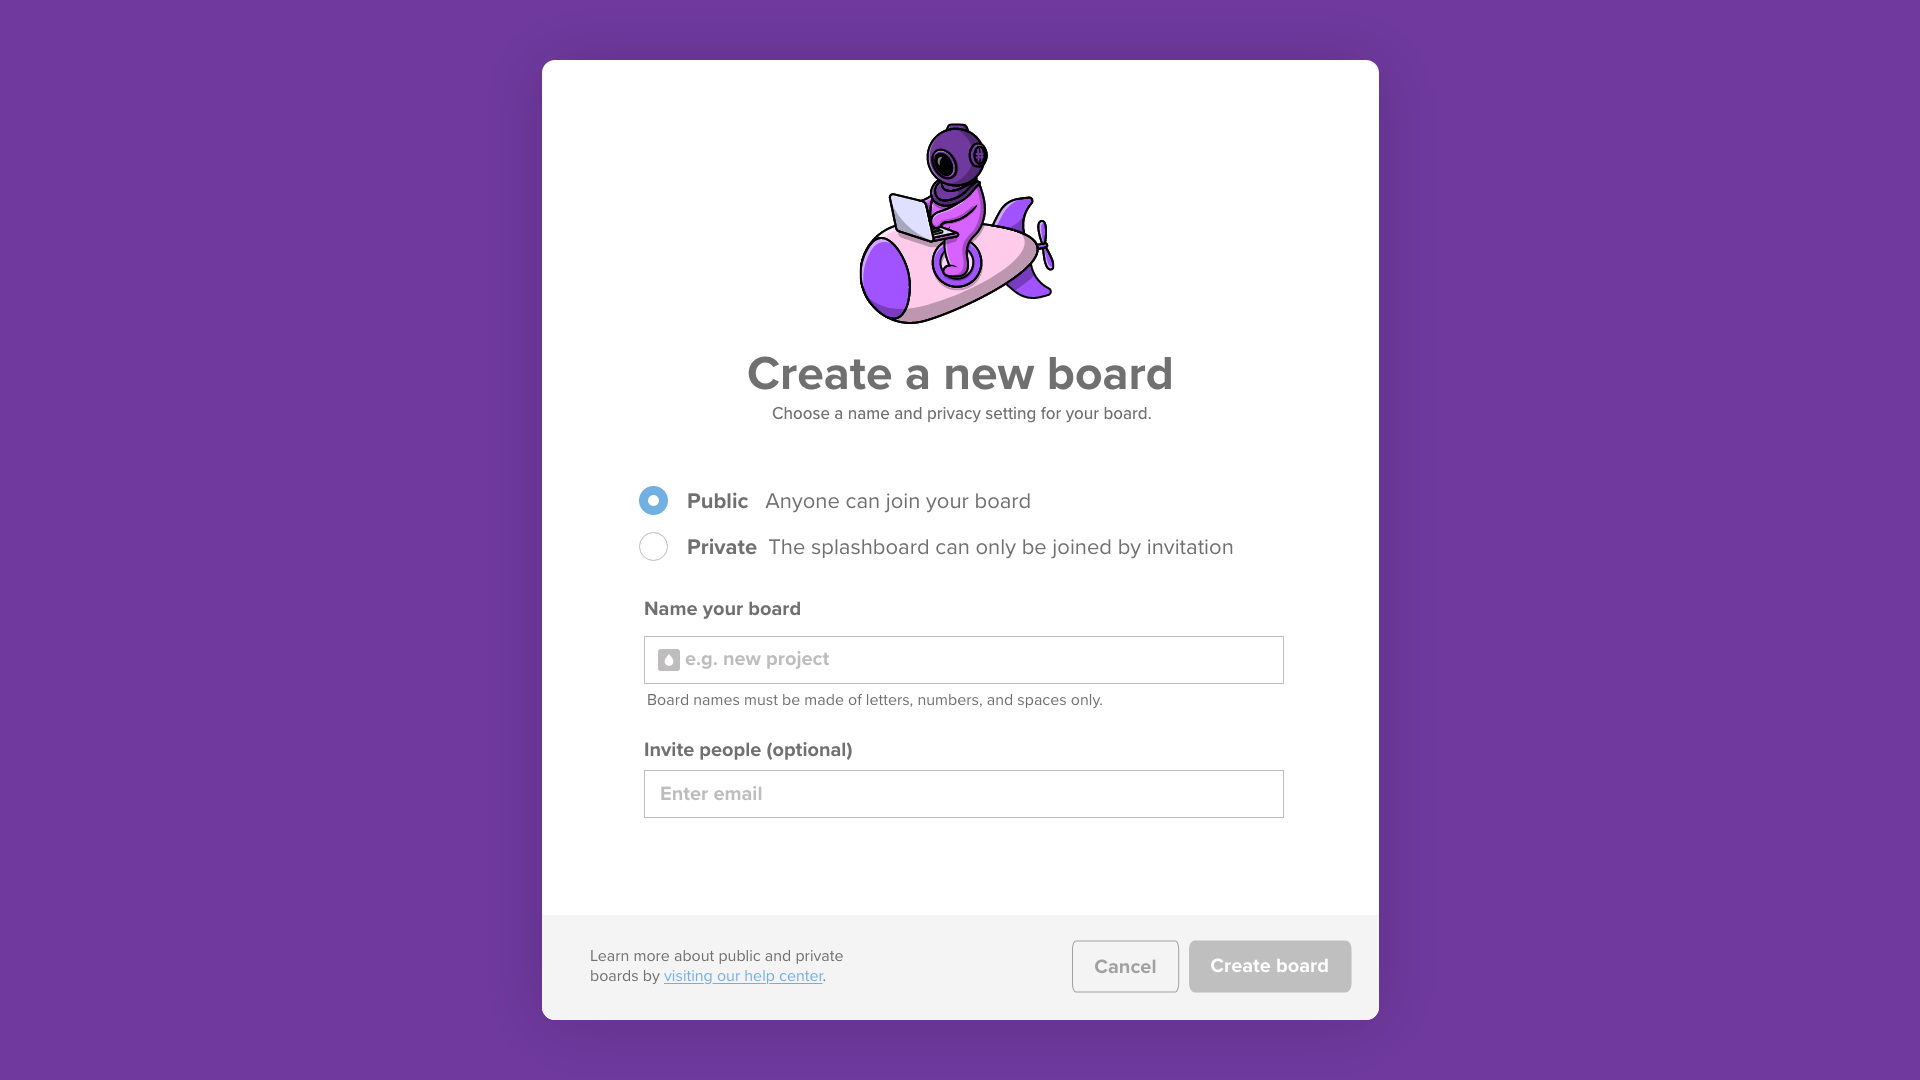 create a new board modal window